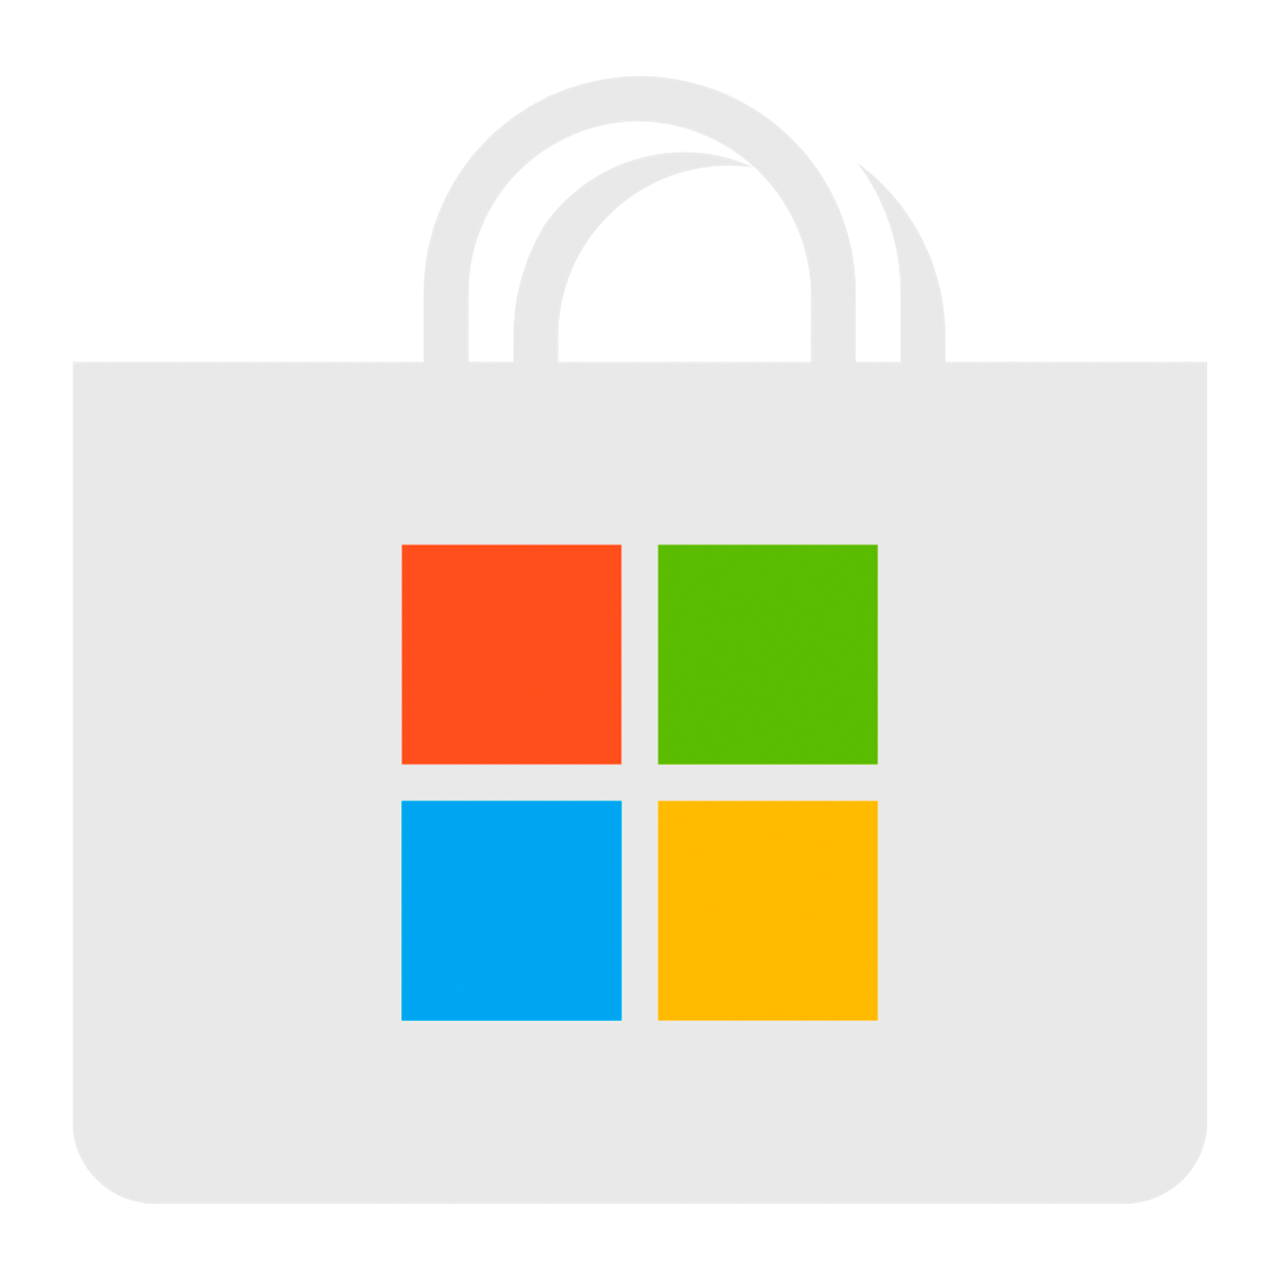 Microsoft icon. Microsoft Store logo. Майкрософт стор. Microsoft Store icon. Значок магазина Windows.